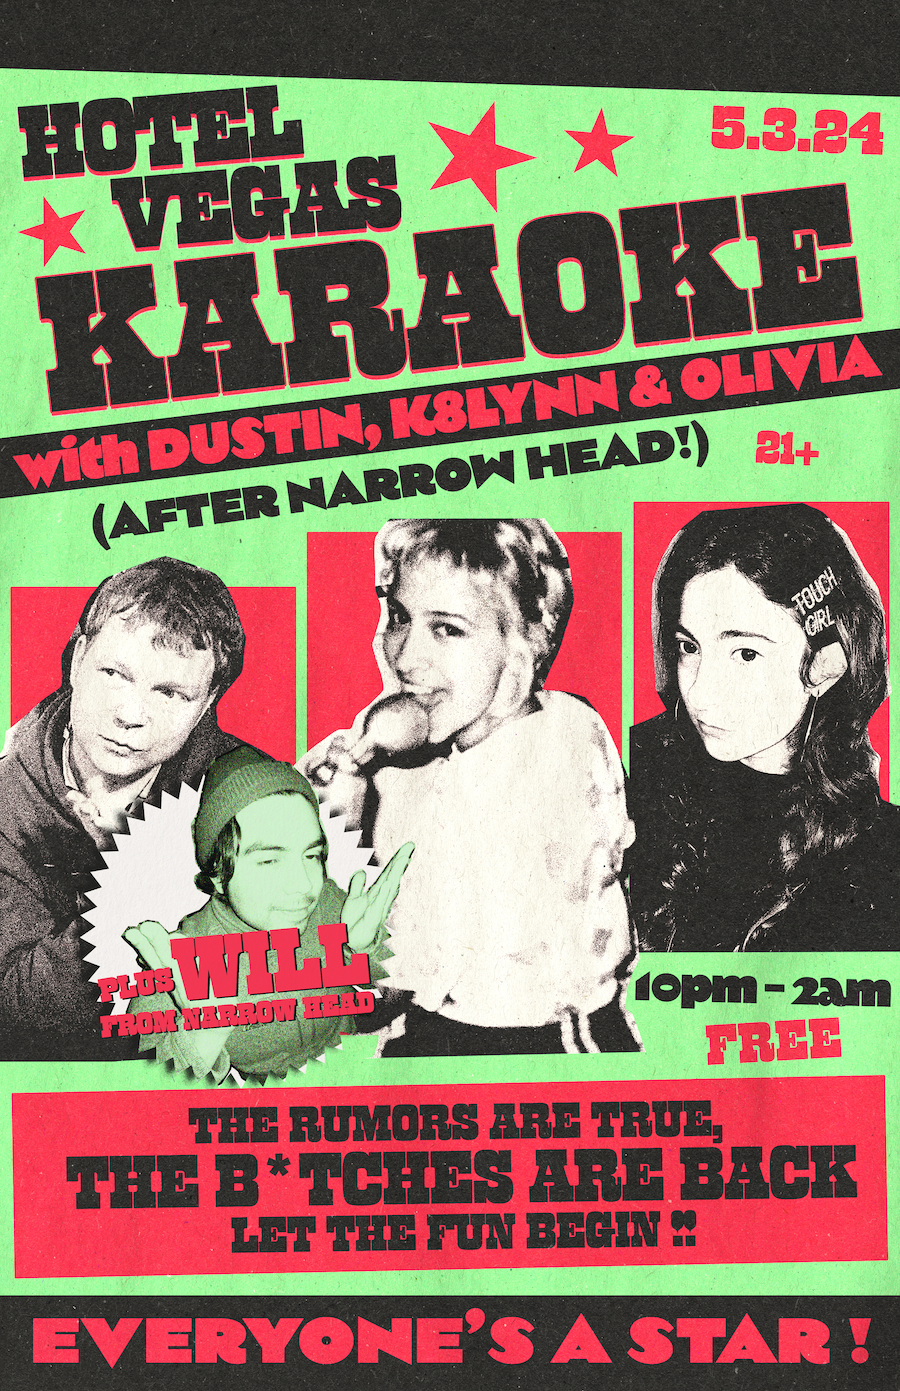 Hotel Vegas Karaoke with Dustin, K8LYNN & Olivia + Will from Narrow Head!